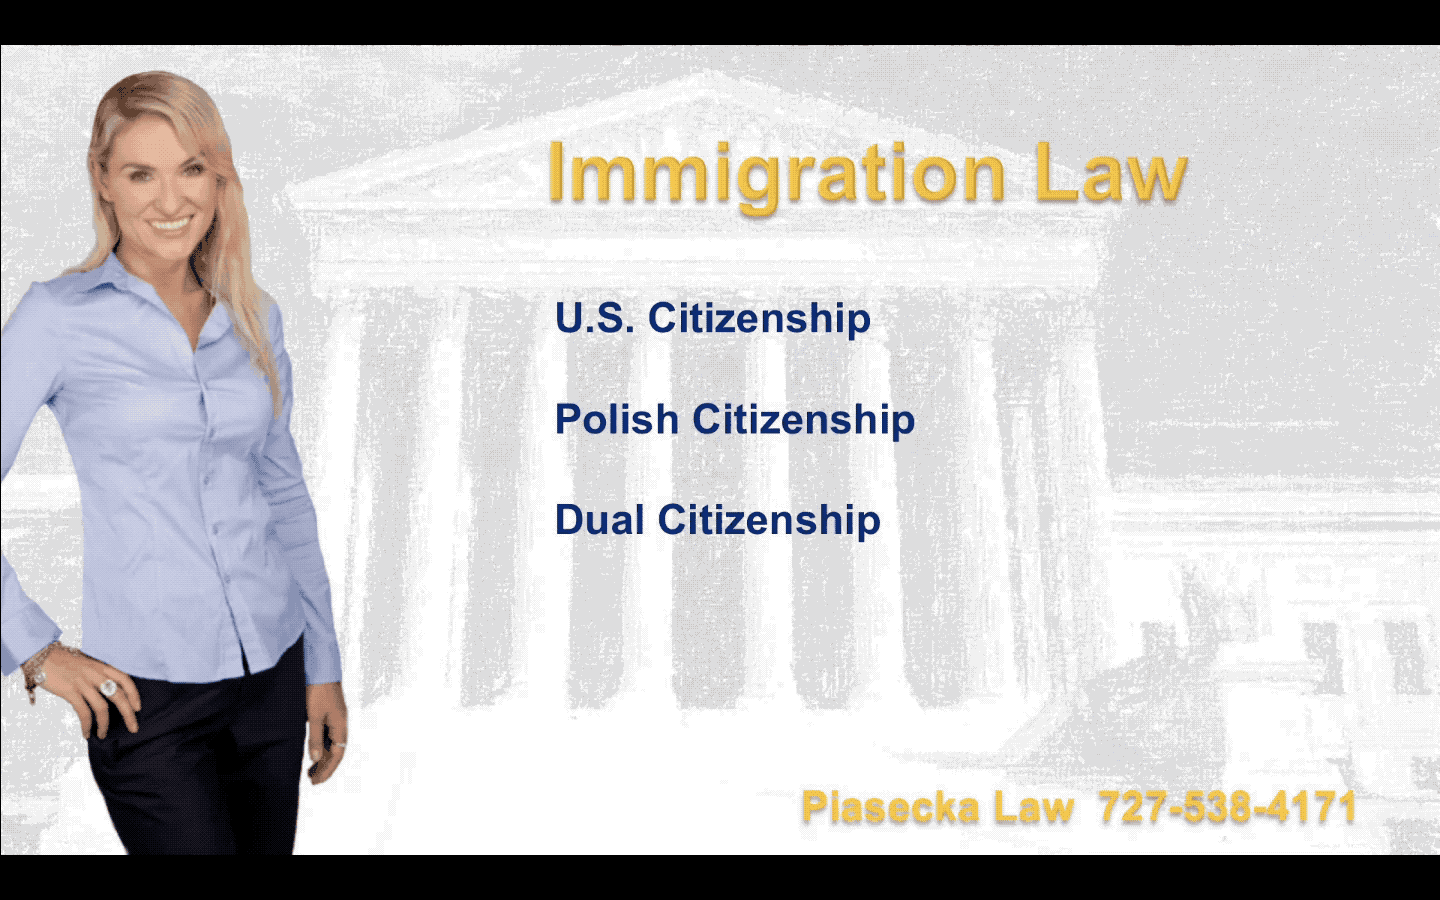 Piasecka Law 727-538-4171 Immigration Law USA